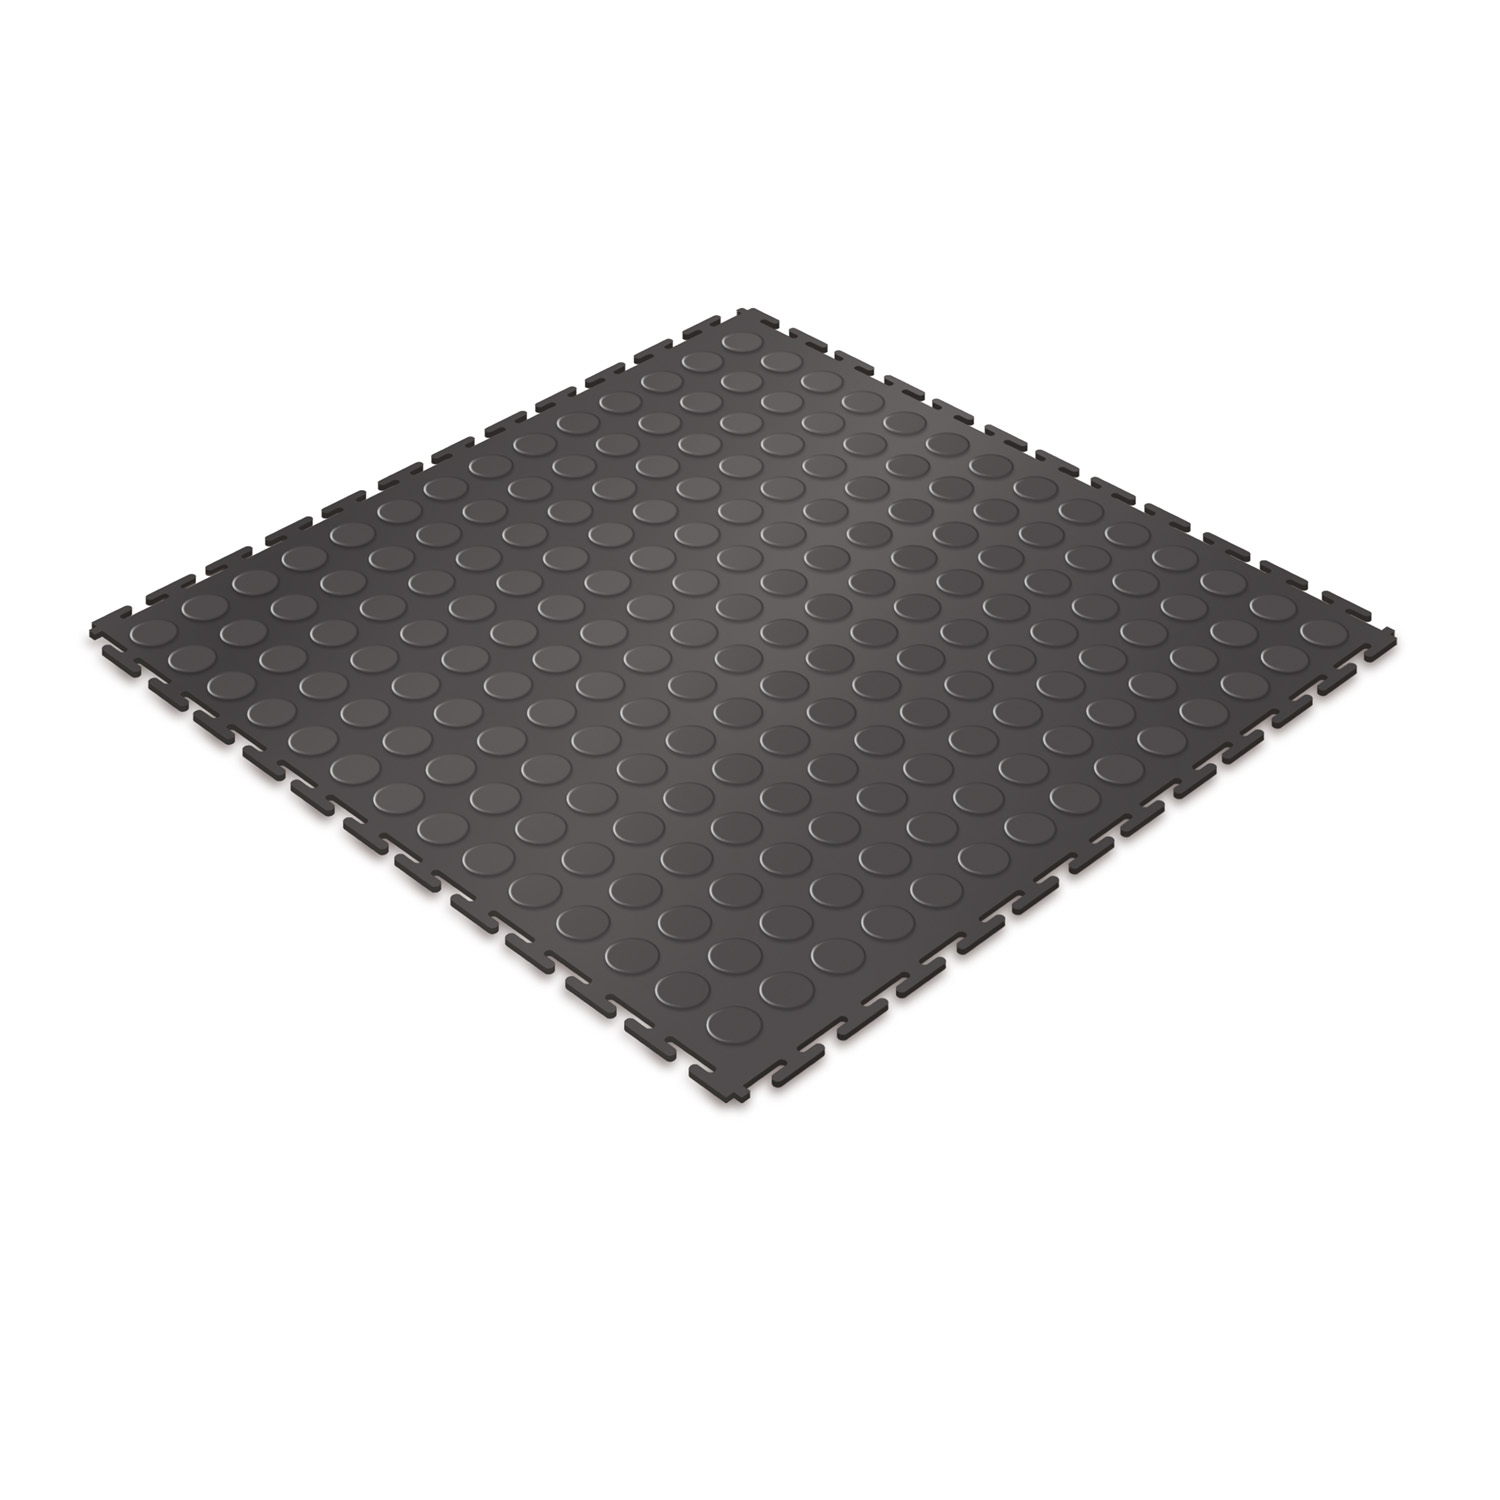 Standard floor tile (black/studded)